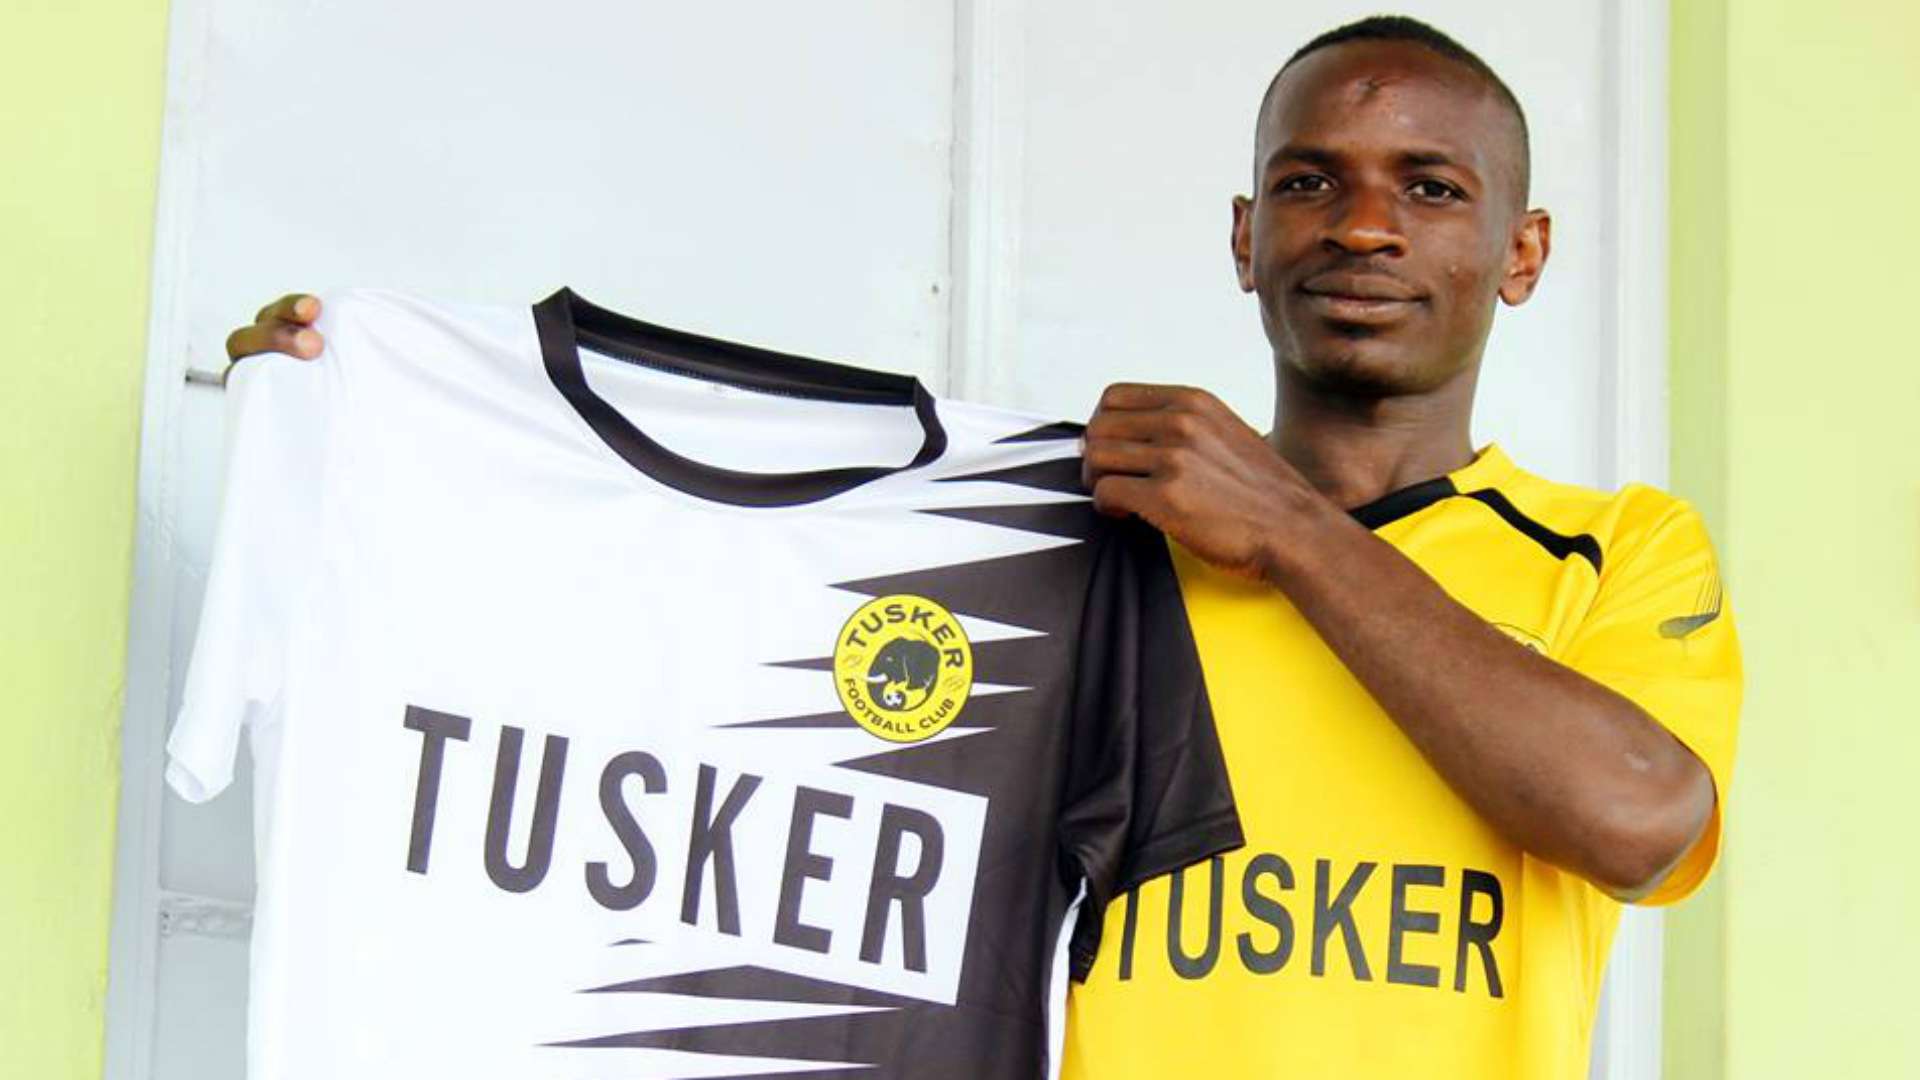 Tusker sign Michael Madoya.